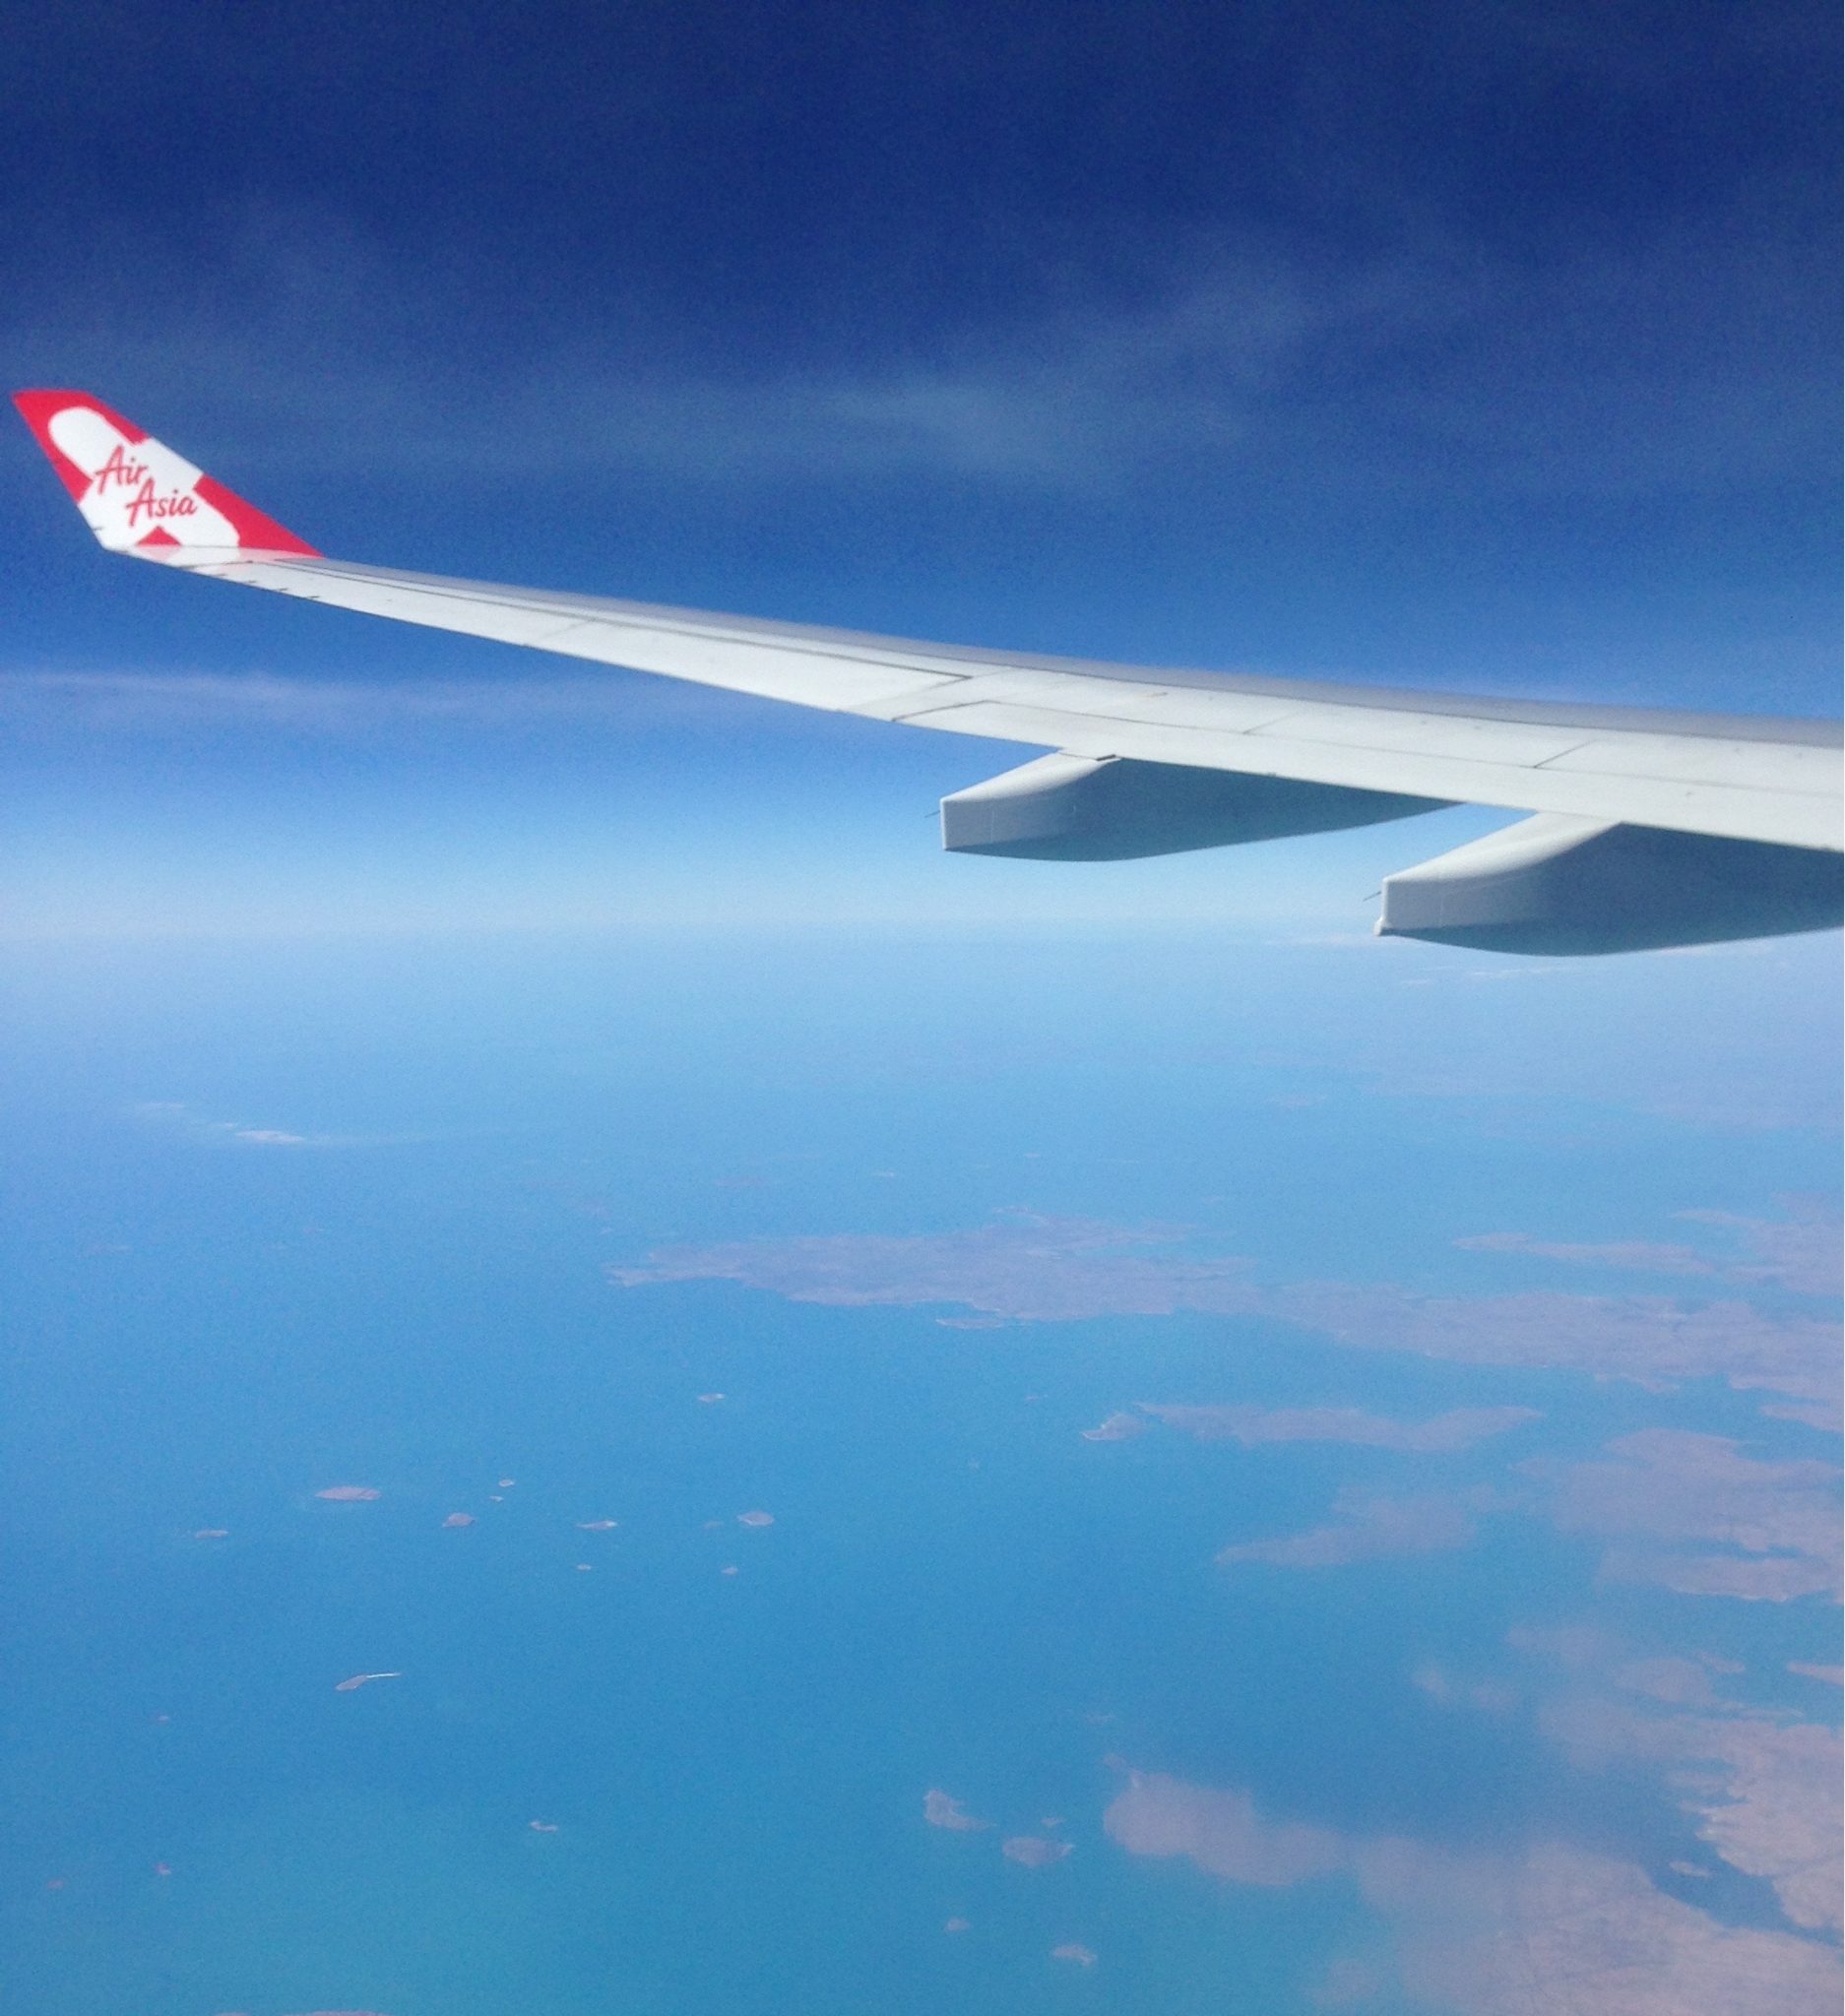 AirAsia bags three World Travel Awards 2015